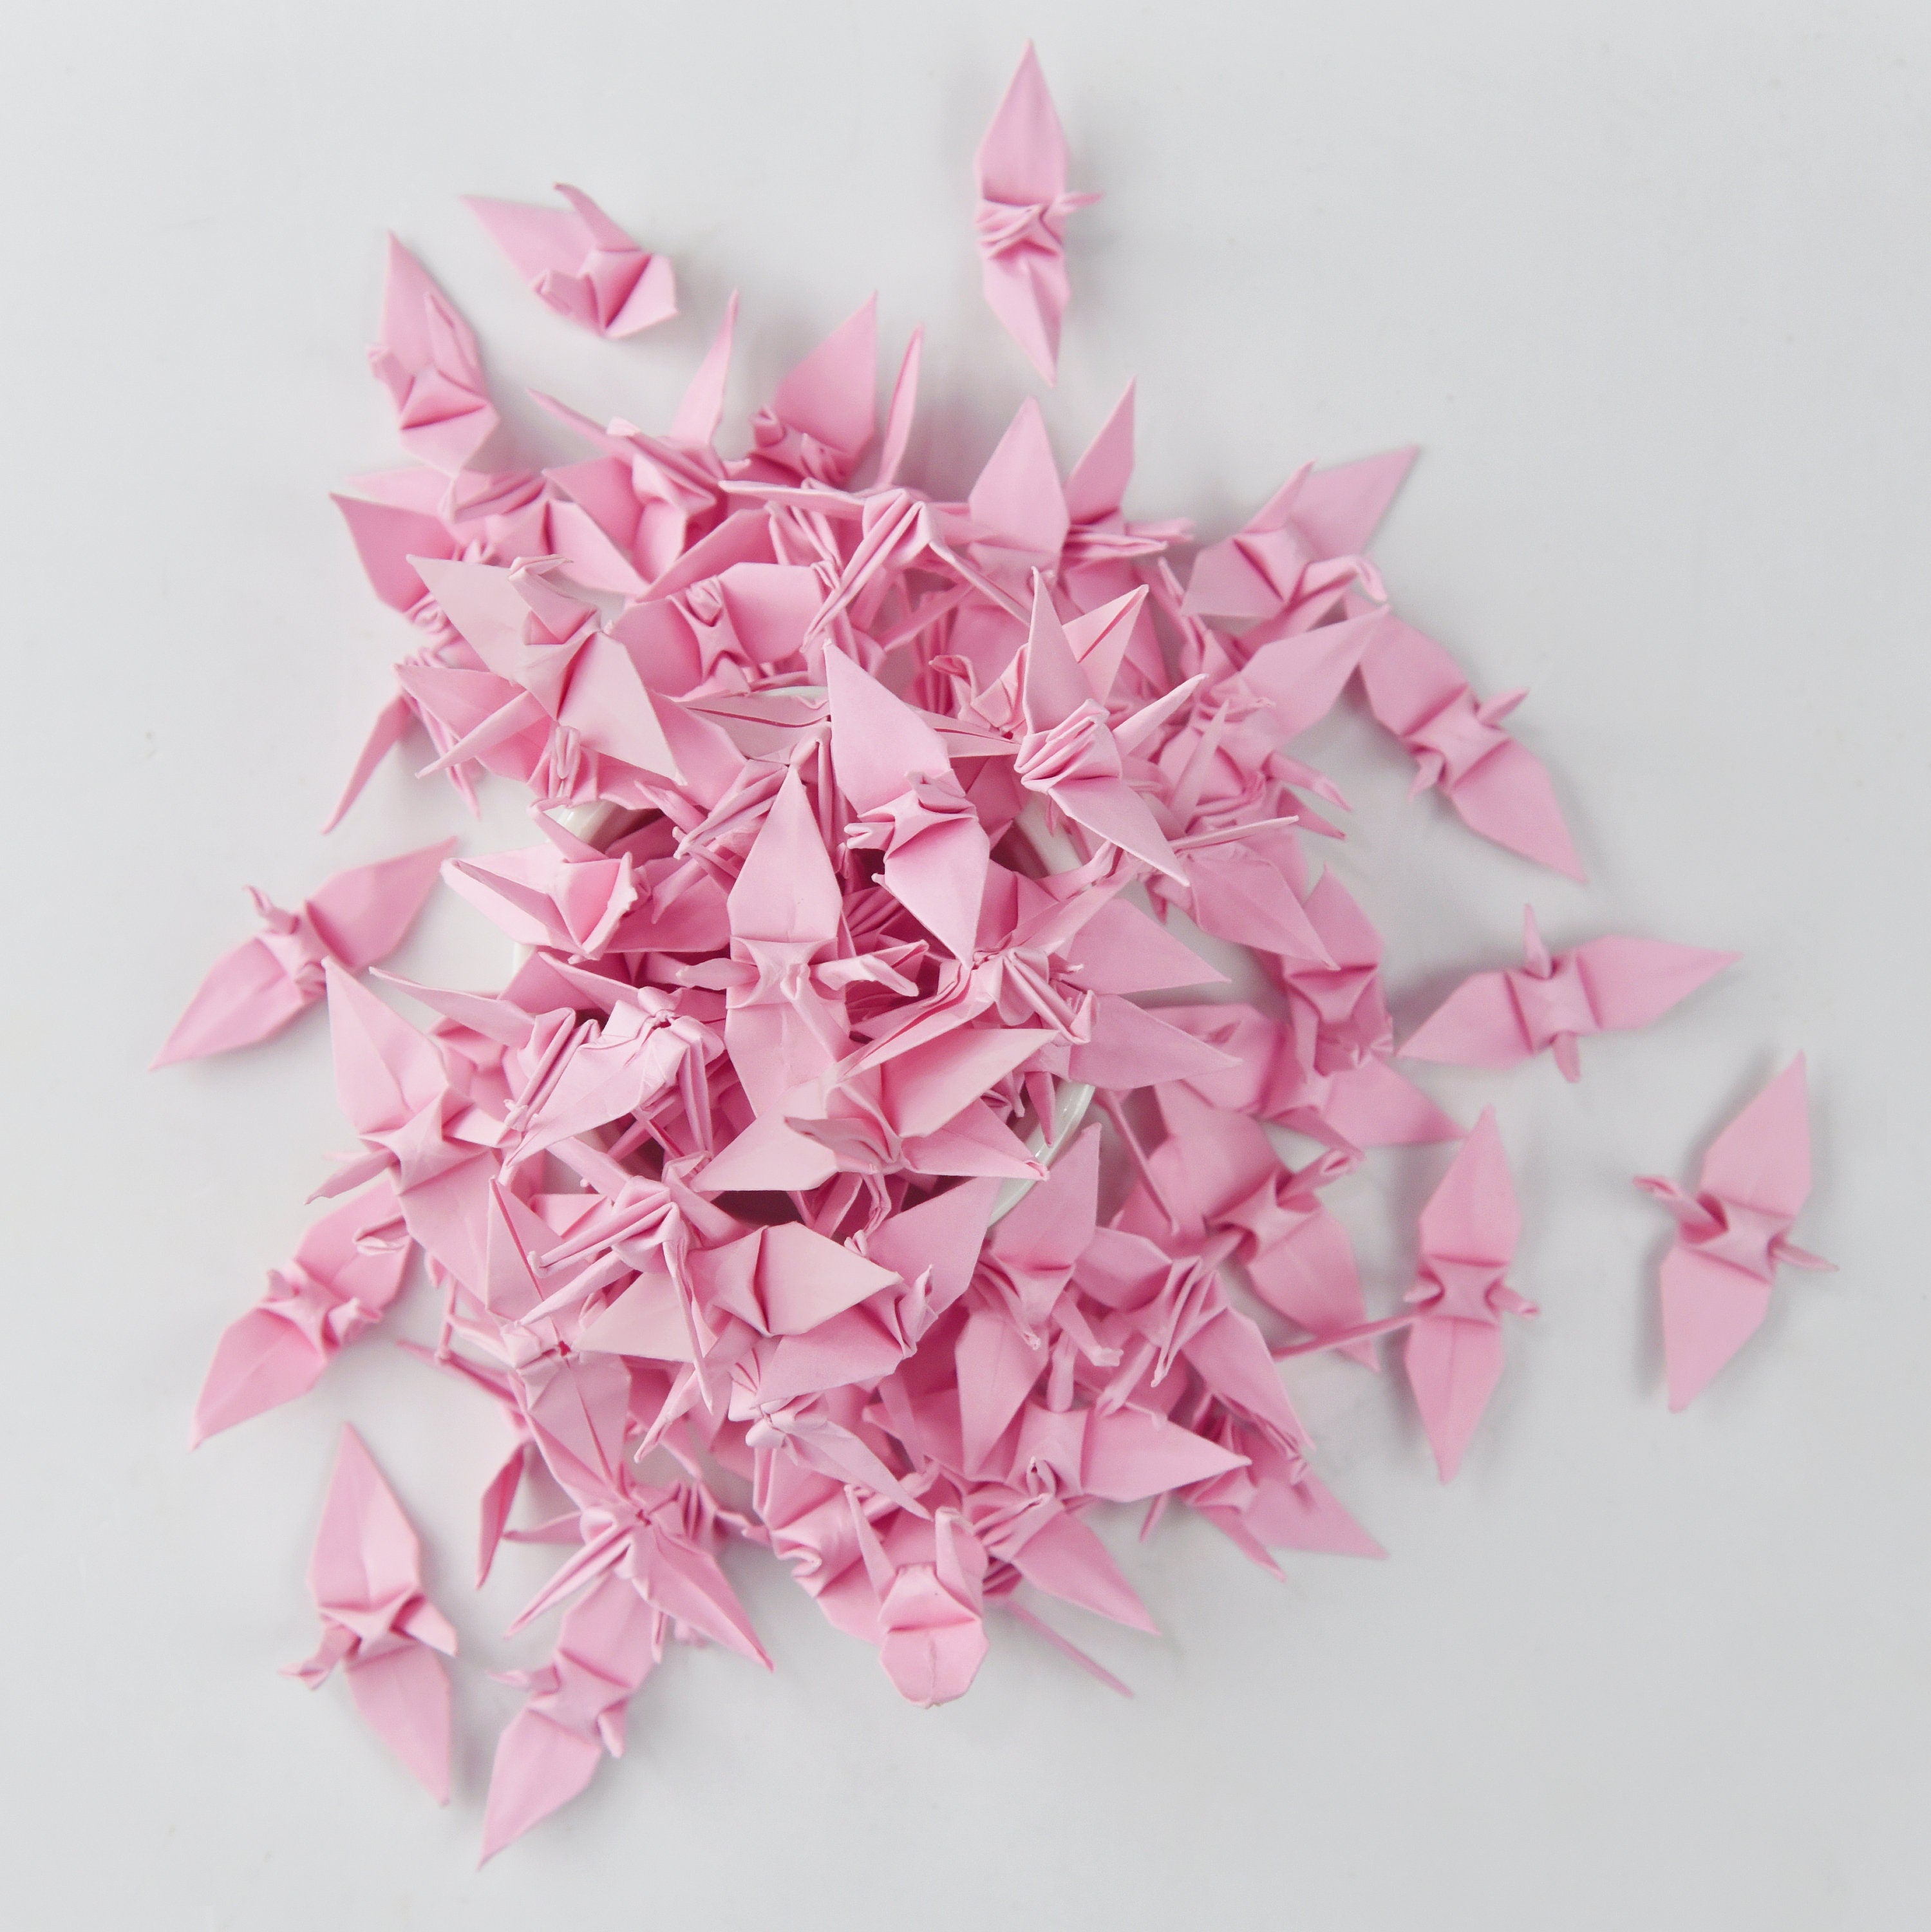 100 Origami Paper Crane Pink Origami Cranes Pre Made Small 1.5x1.5 inches for Wedding Decor, Anniversary Gift, Valentine